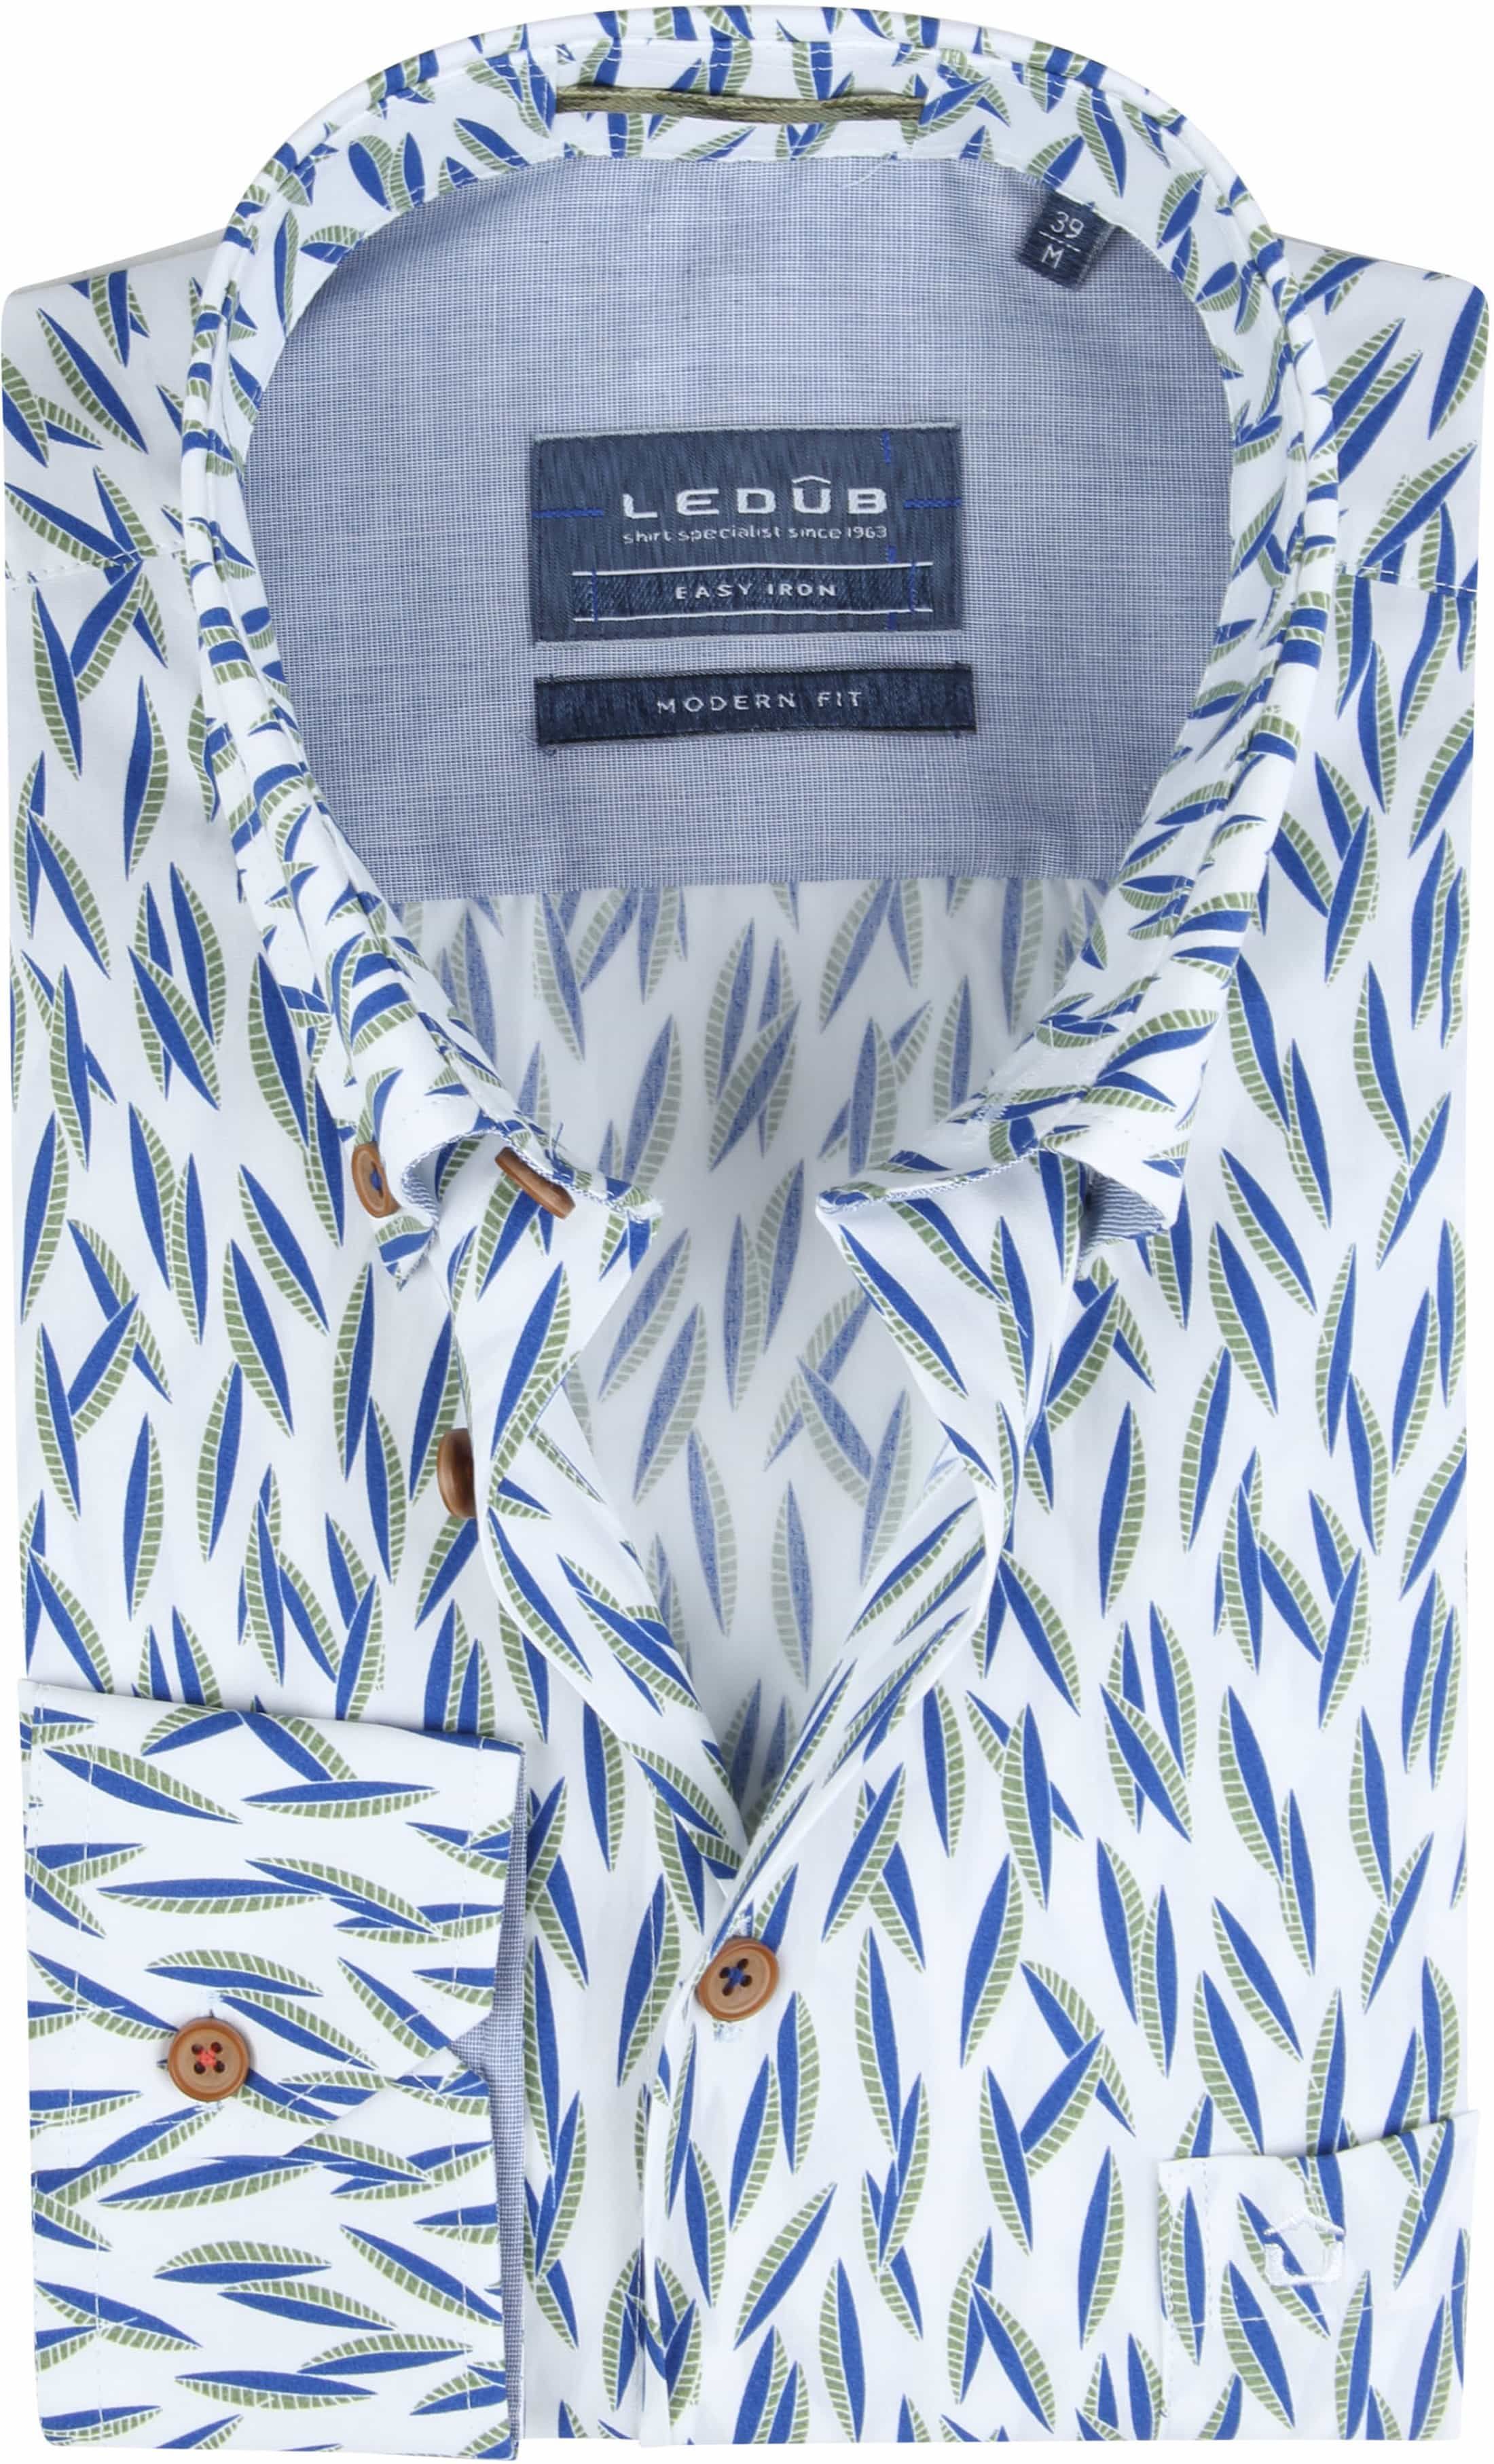 Ledub Shirt Easy Iron Leafs Multicolour size 15 1/2